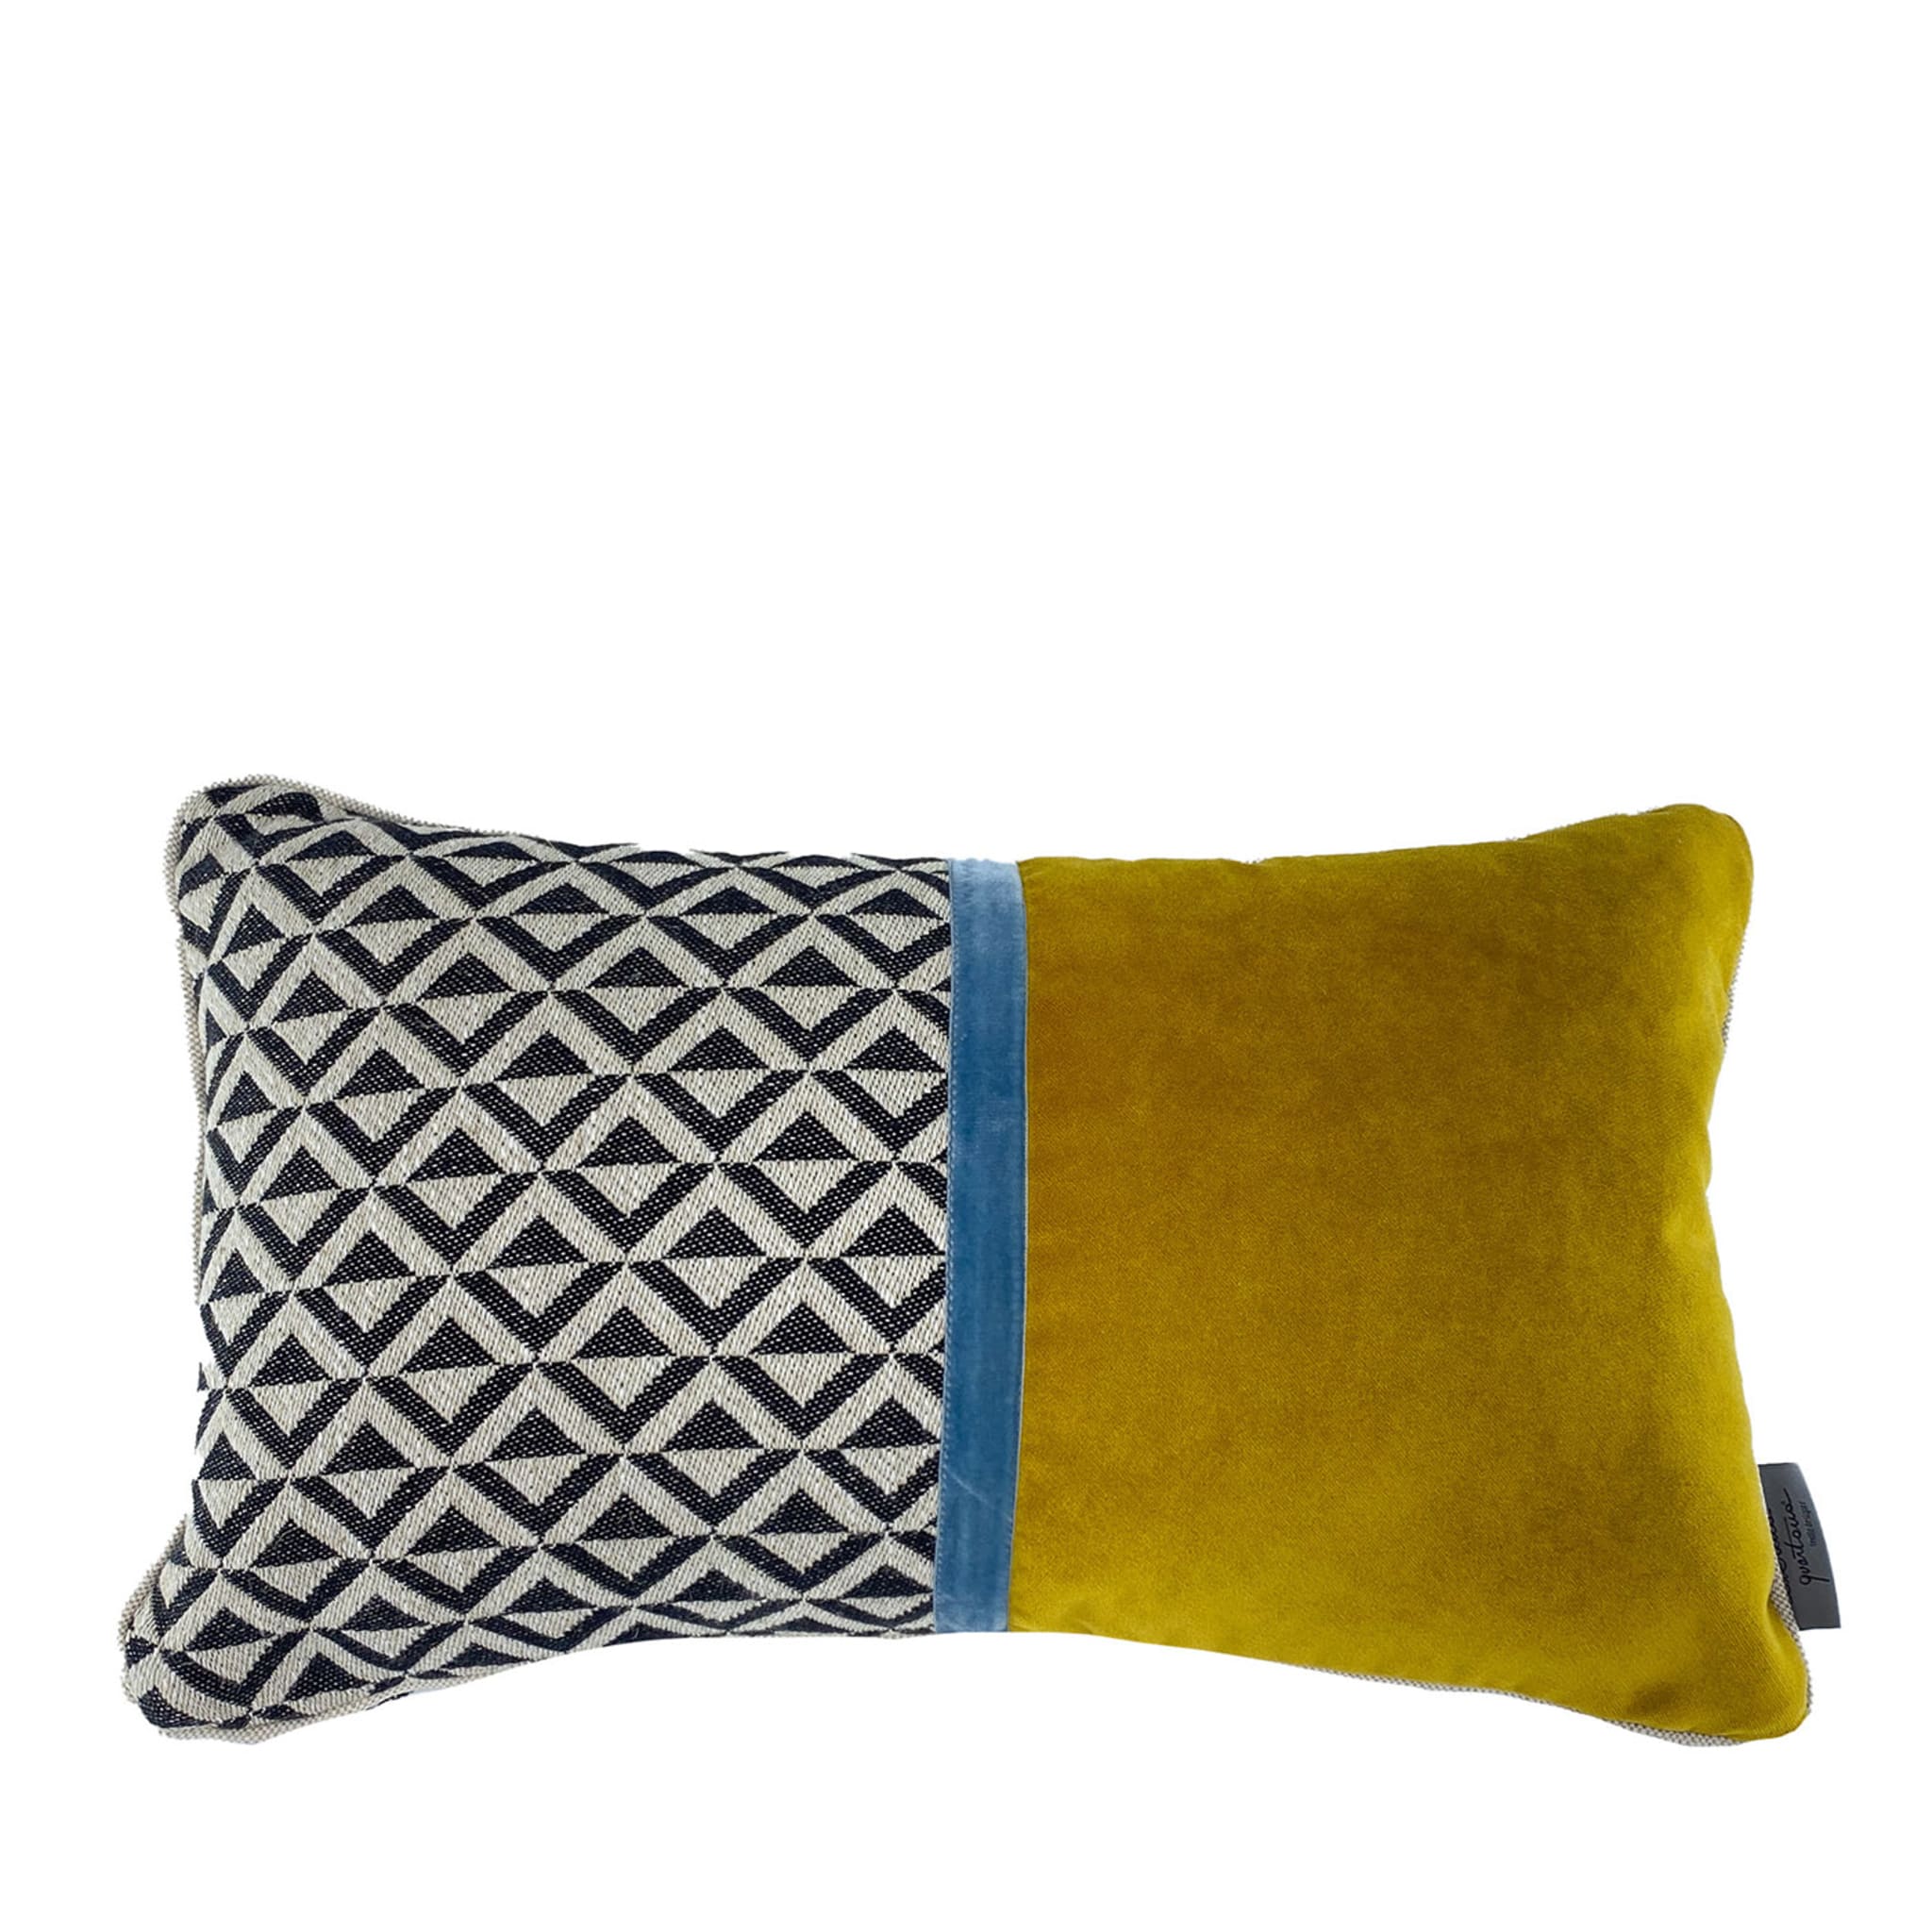 Losanghe Patterned Black&White/Saffron Yellow Rectangular Cushion - Main view